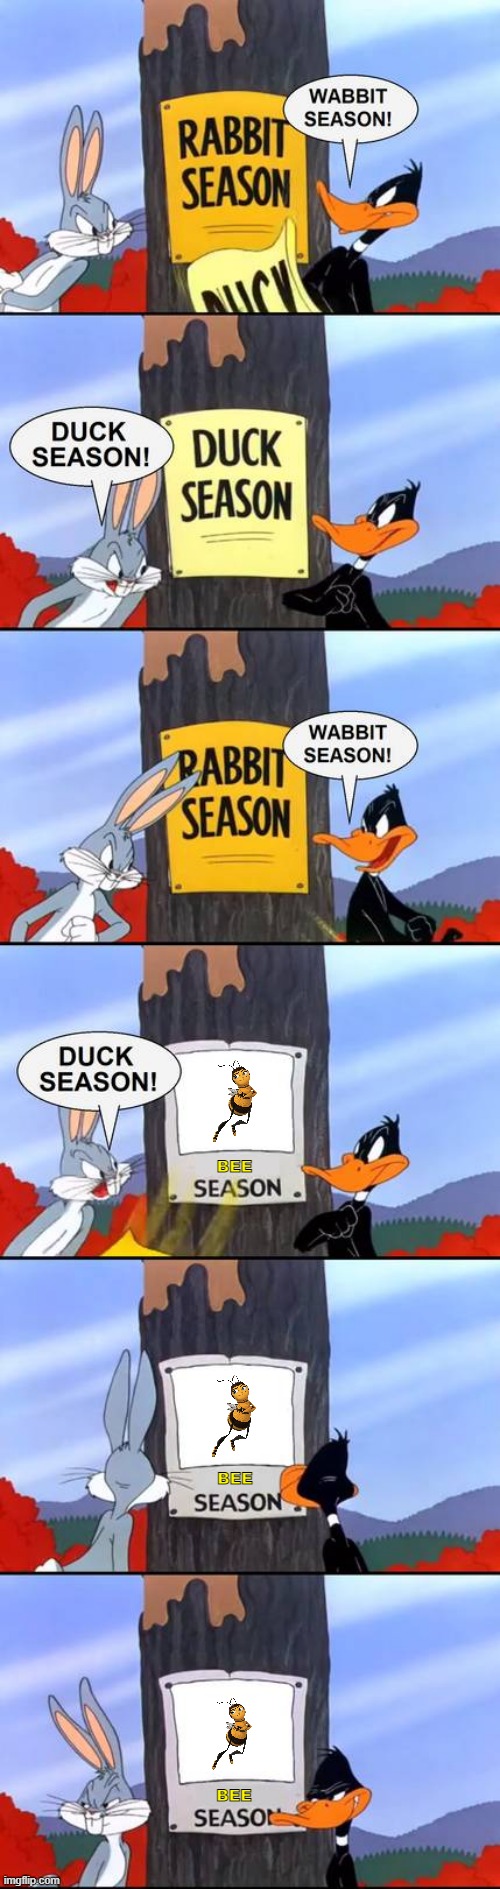 bee season | BEE; BEE; BEE | image tagged in wabbit season duck season elmer season,bunnies,ducks,bees | made w/ Imgflip meme maker